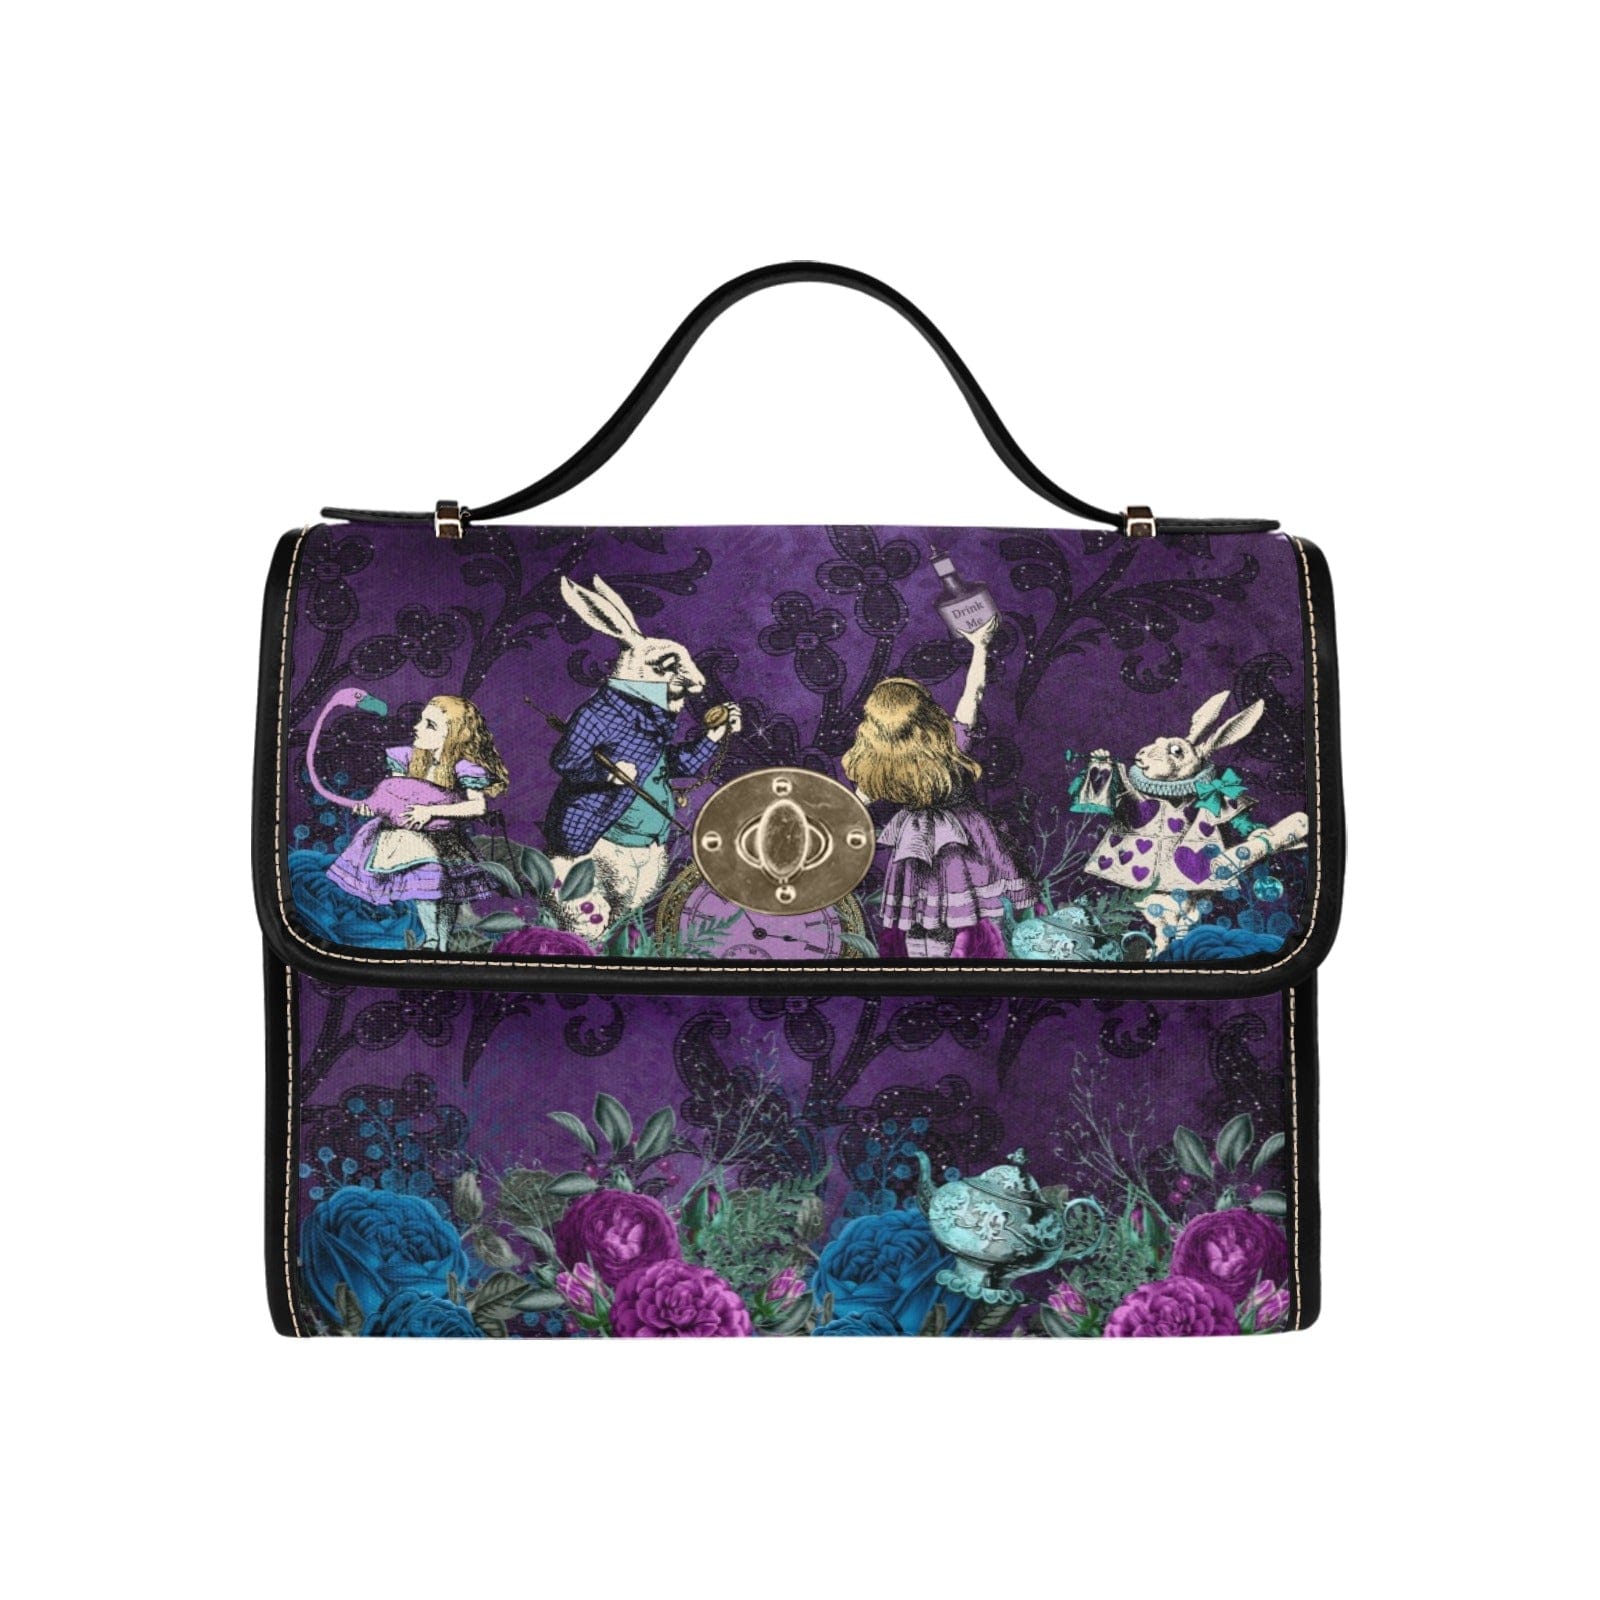 Purple damask background on an Alice in wonderland themed gothic satchel handbag featuring the White Rabbit at Gallery Serpentine